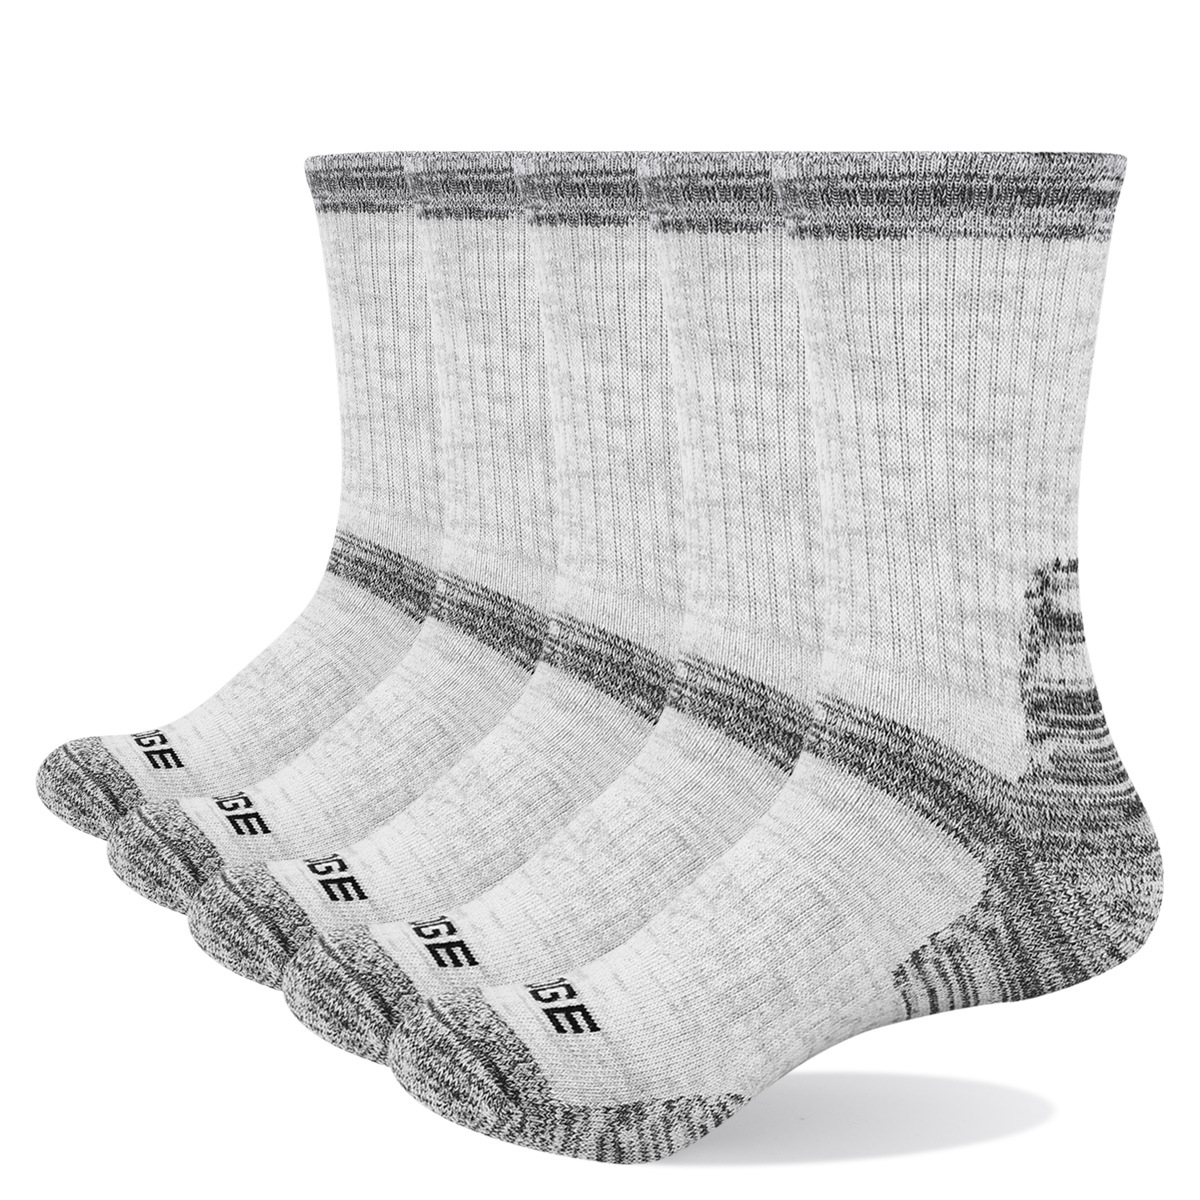 YUEDGE 10 Pairs Combed Cotton Towel Bottom Socks Outdoor Sports Hiking Socks Hiking Jogging Socks